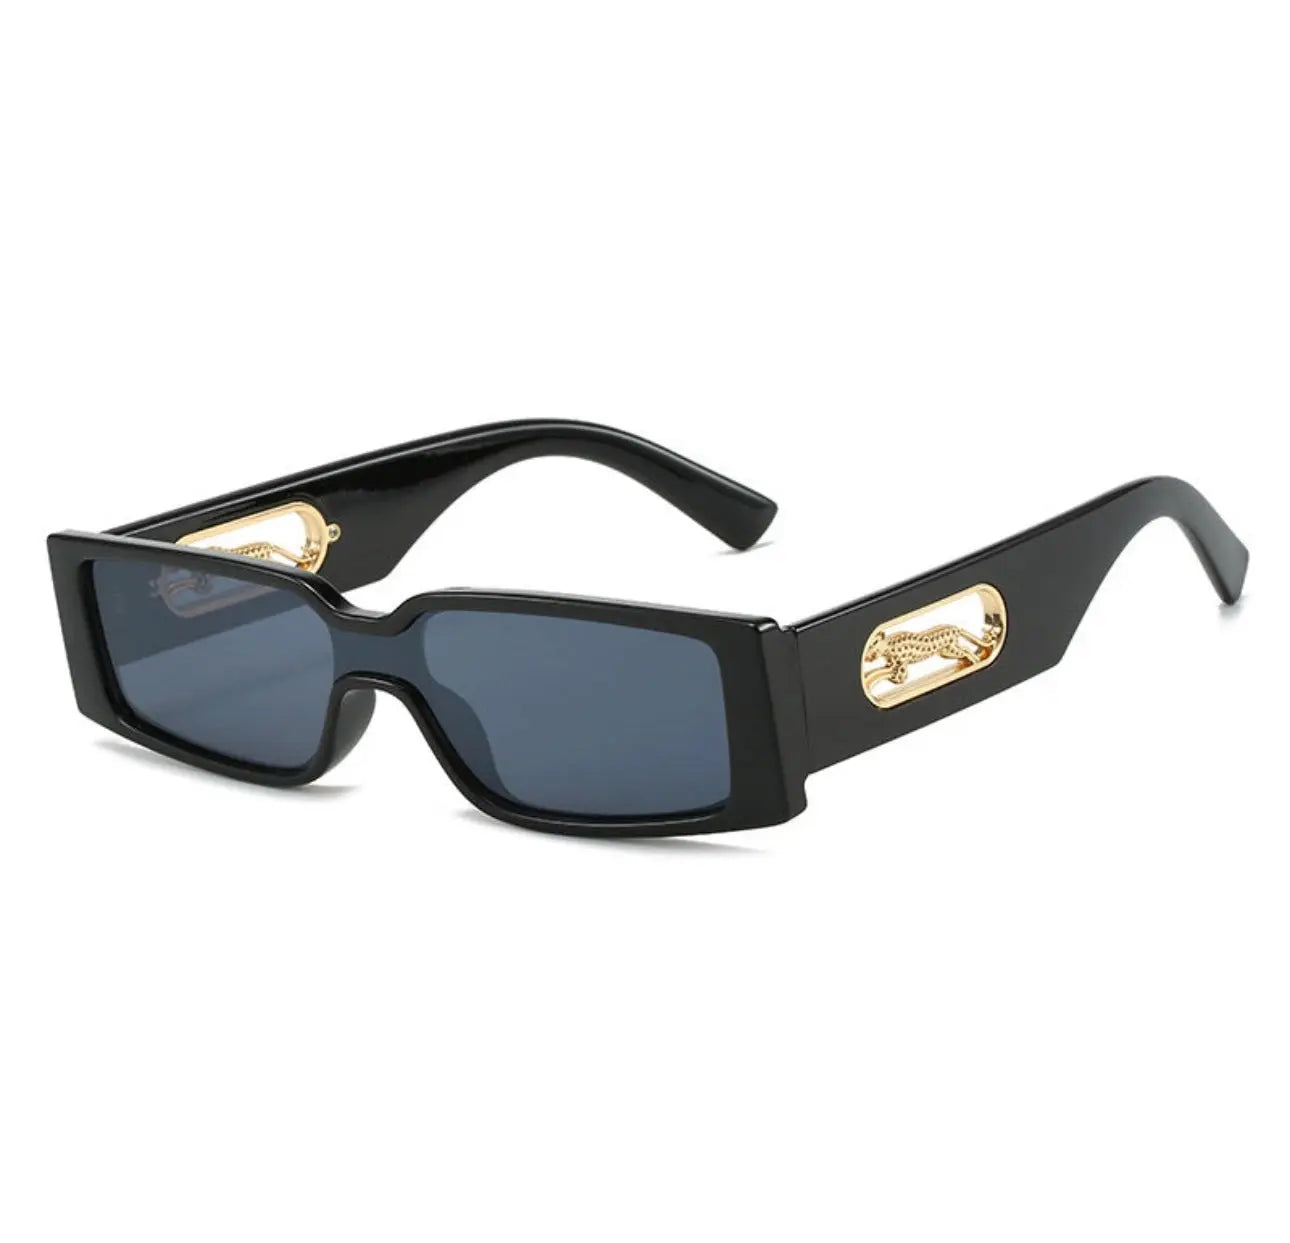 Leopard Sunglasses McClendon Essentials